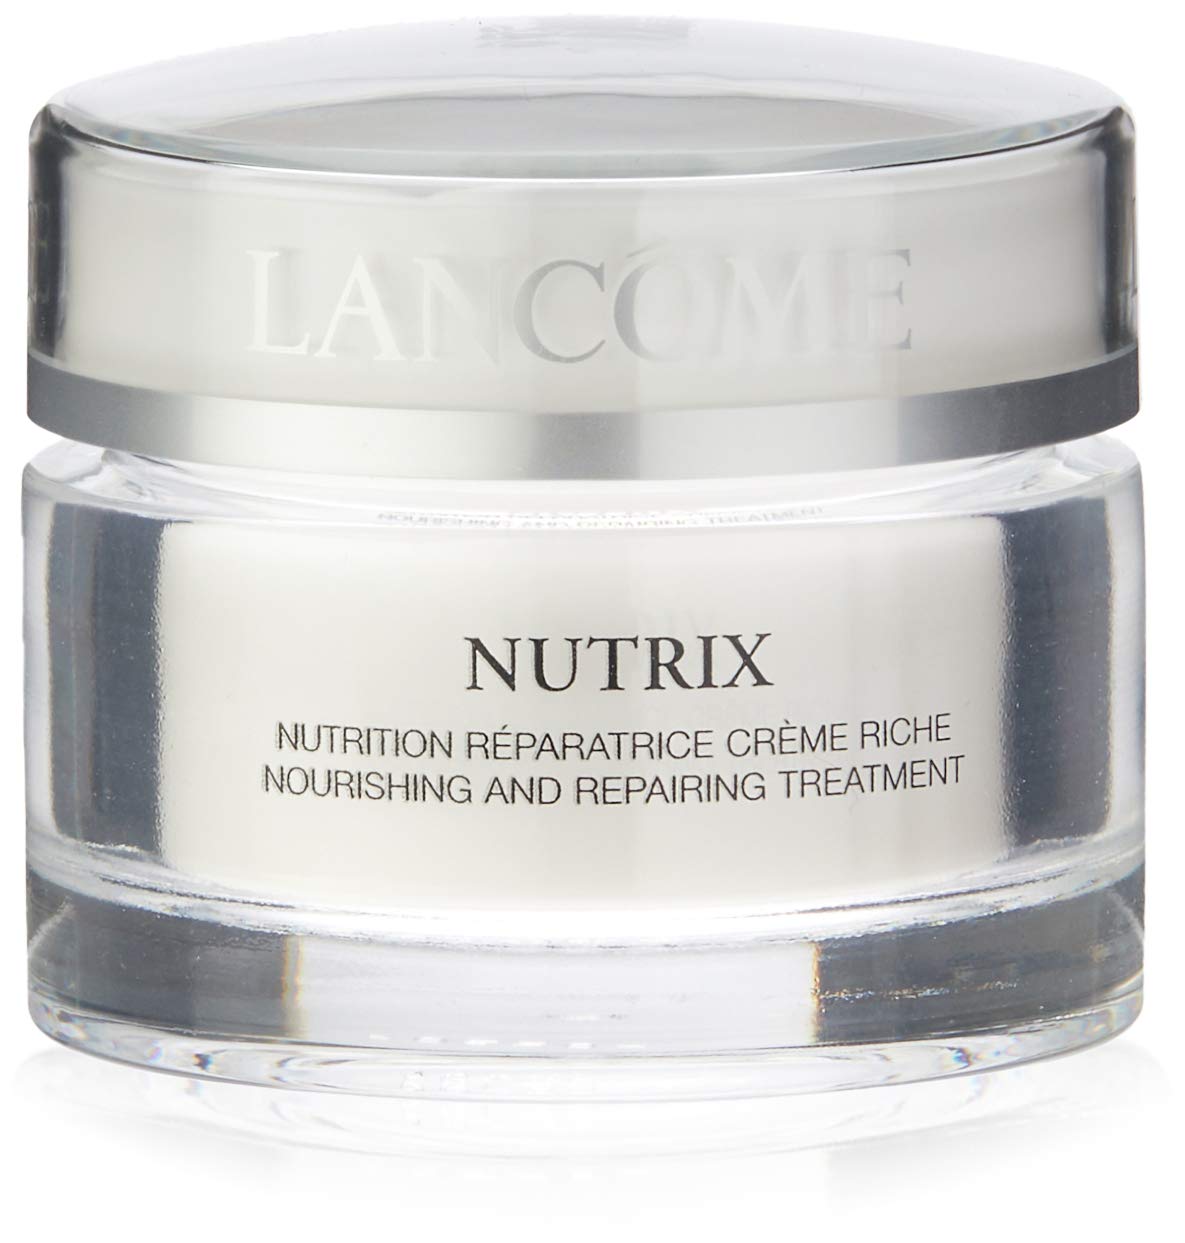 Lancome Nutrix Cream Conditioner Pack of 1 x 0.05 L)